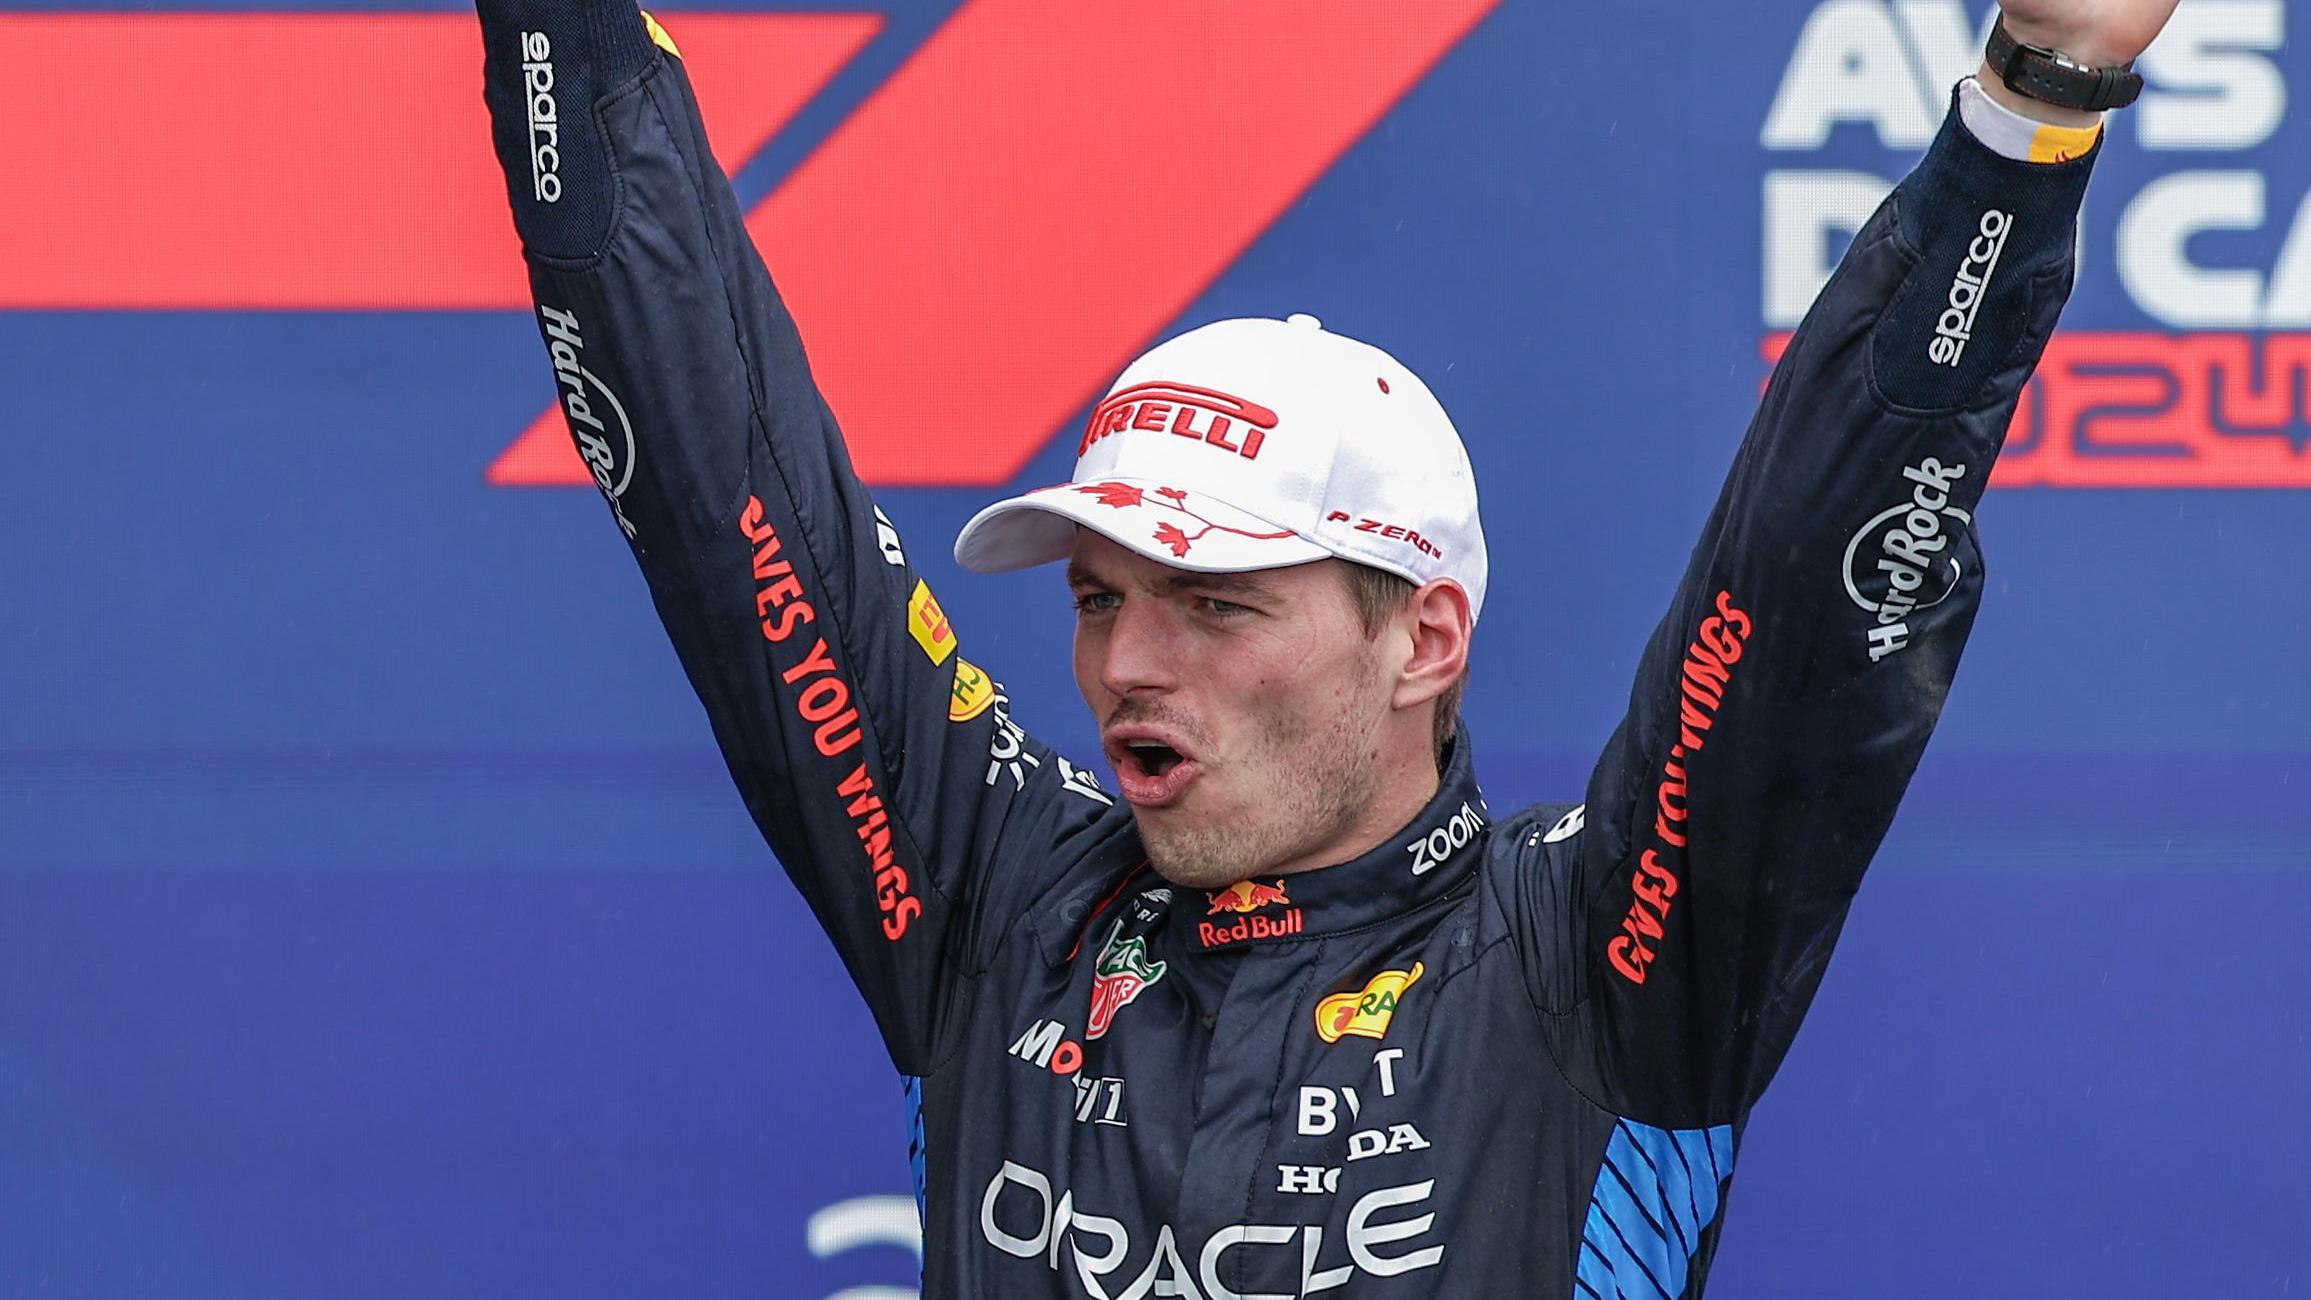 Verstappen wins gripping wet-dry race in Canada